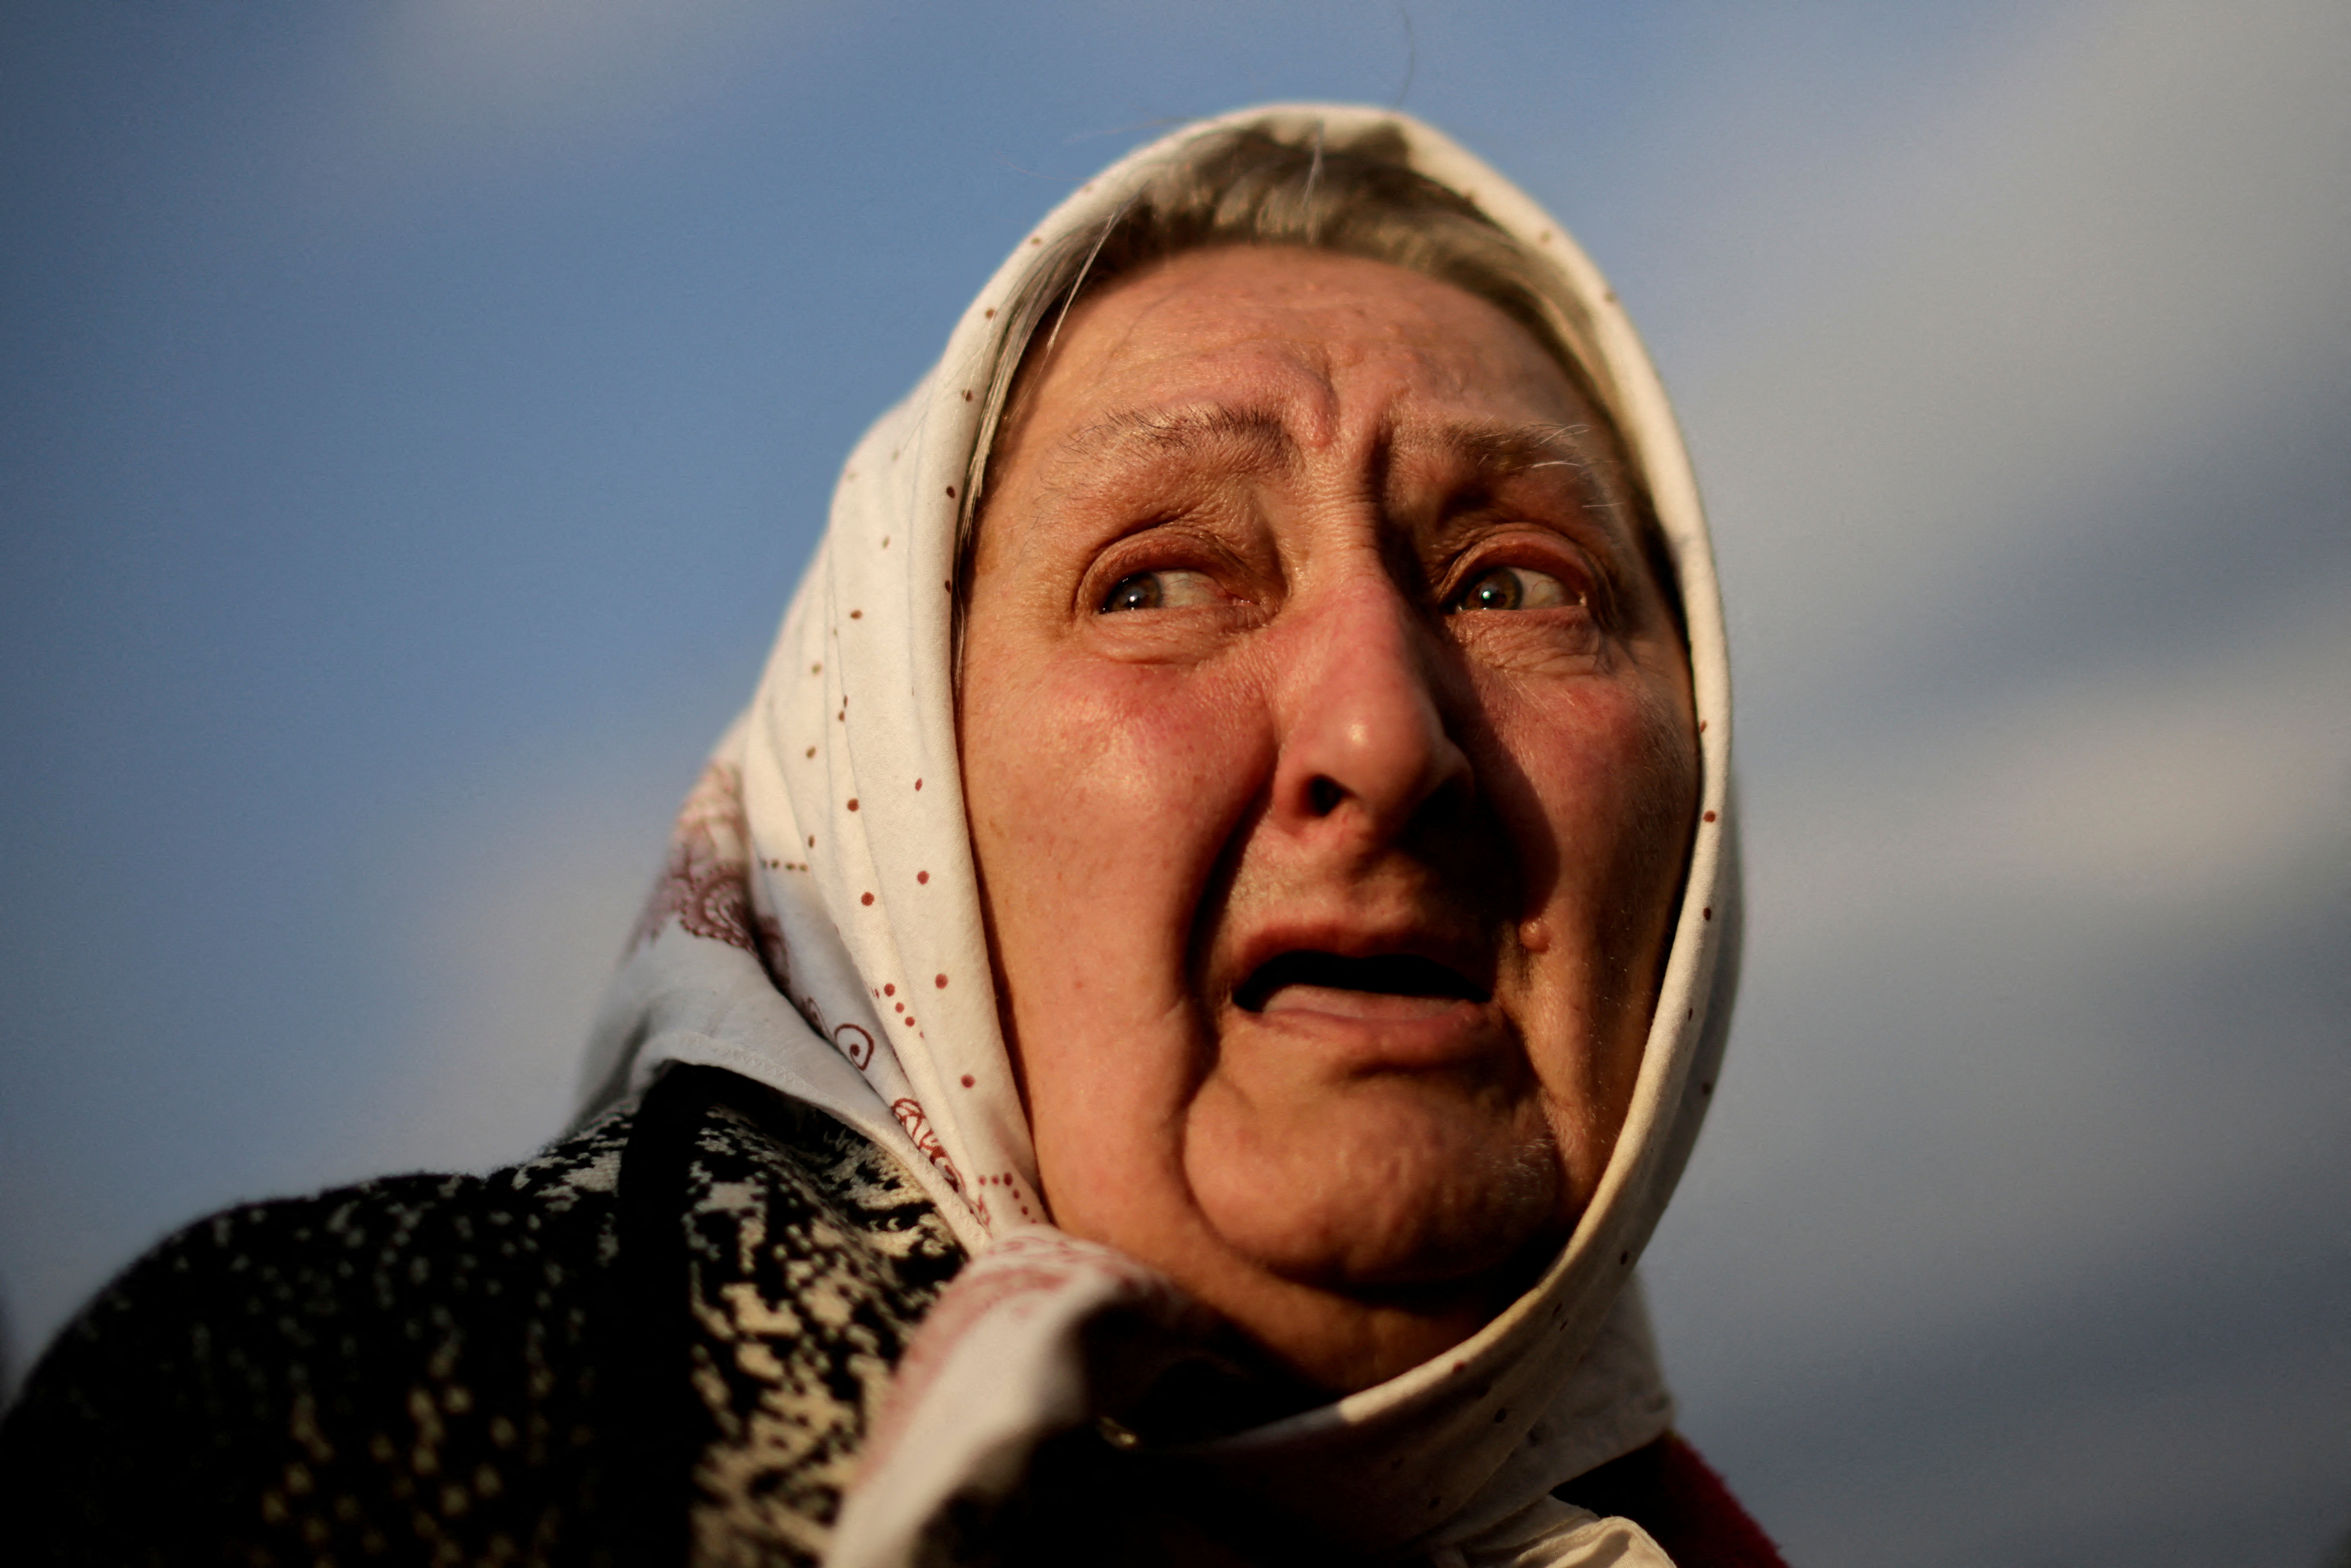 La cara de sufriminto de una refugiada ucrania, que huyó de Mariupol a Zaporizhzhia